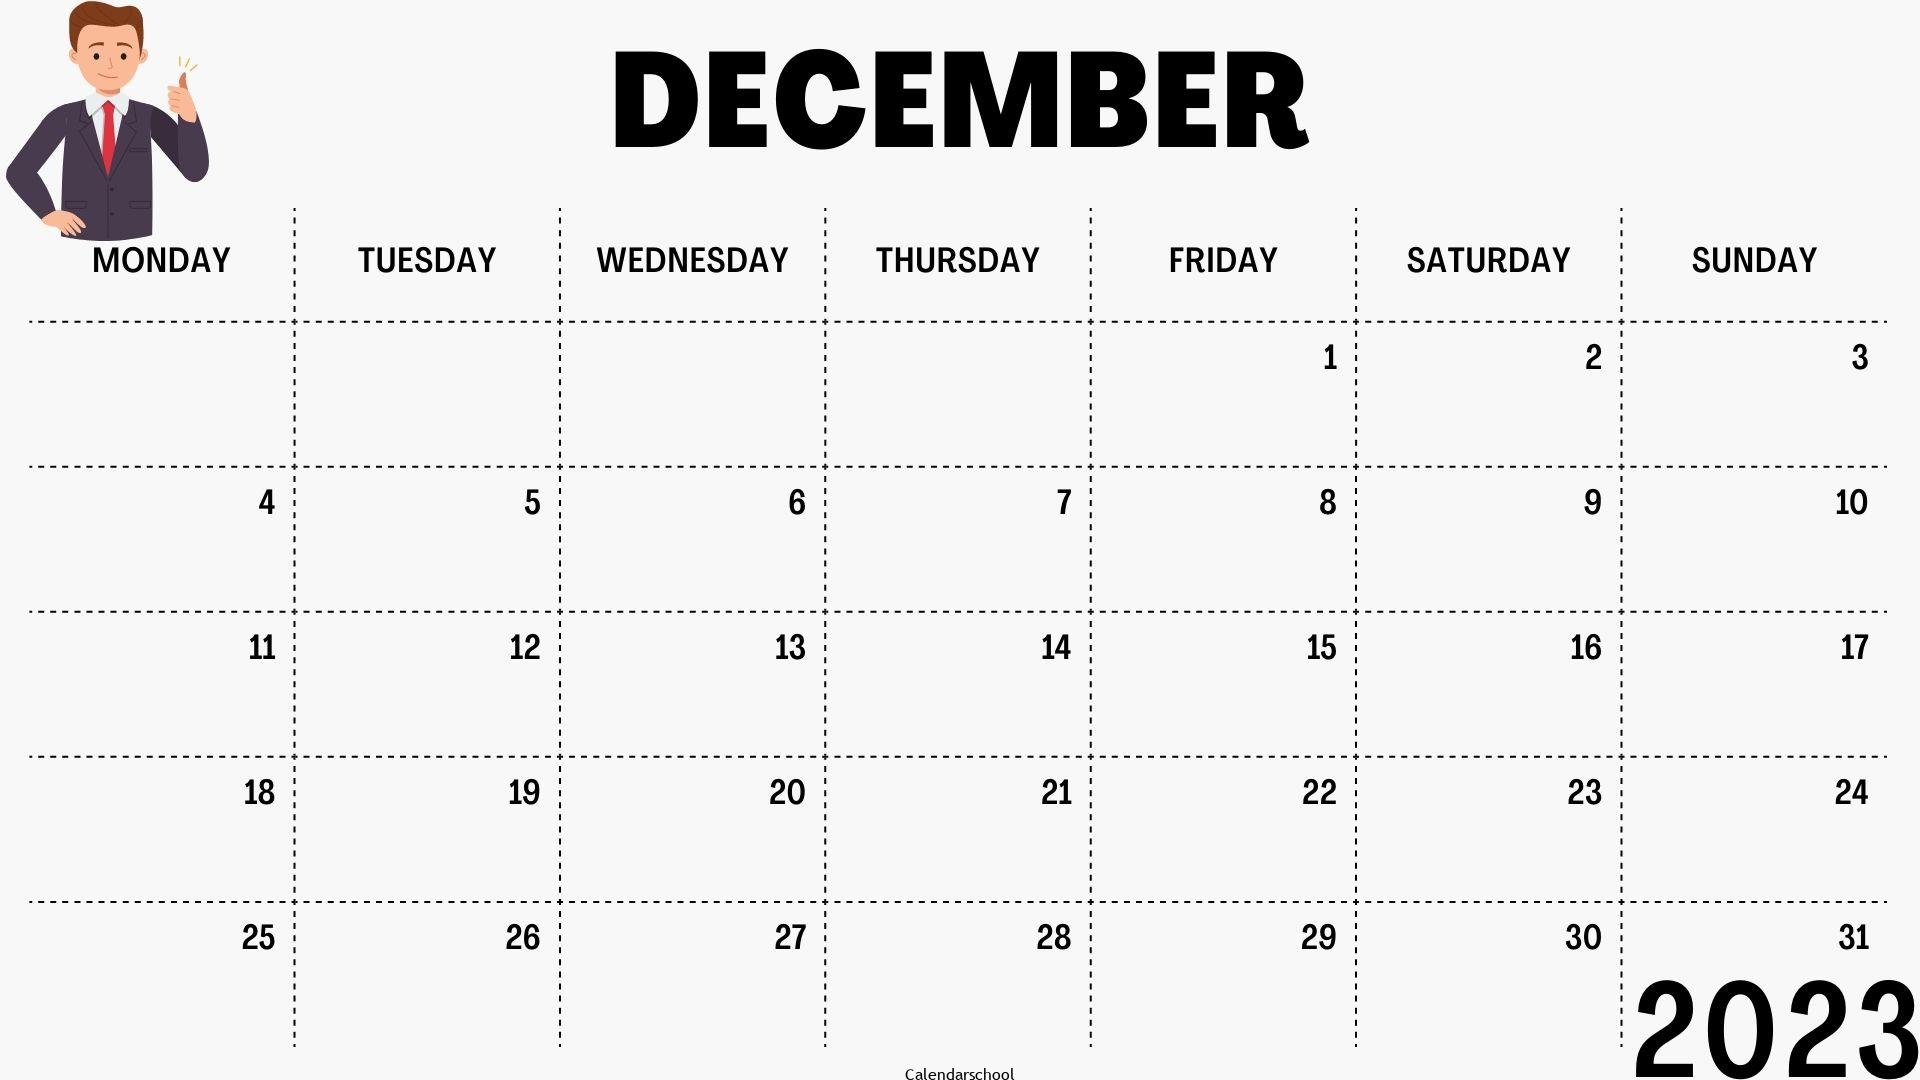 December 2023 Free Blank Calendar